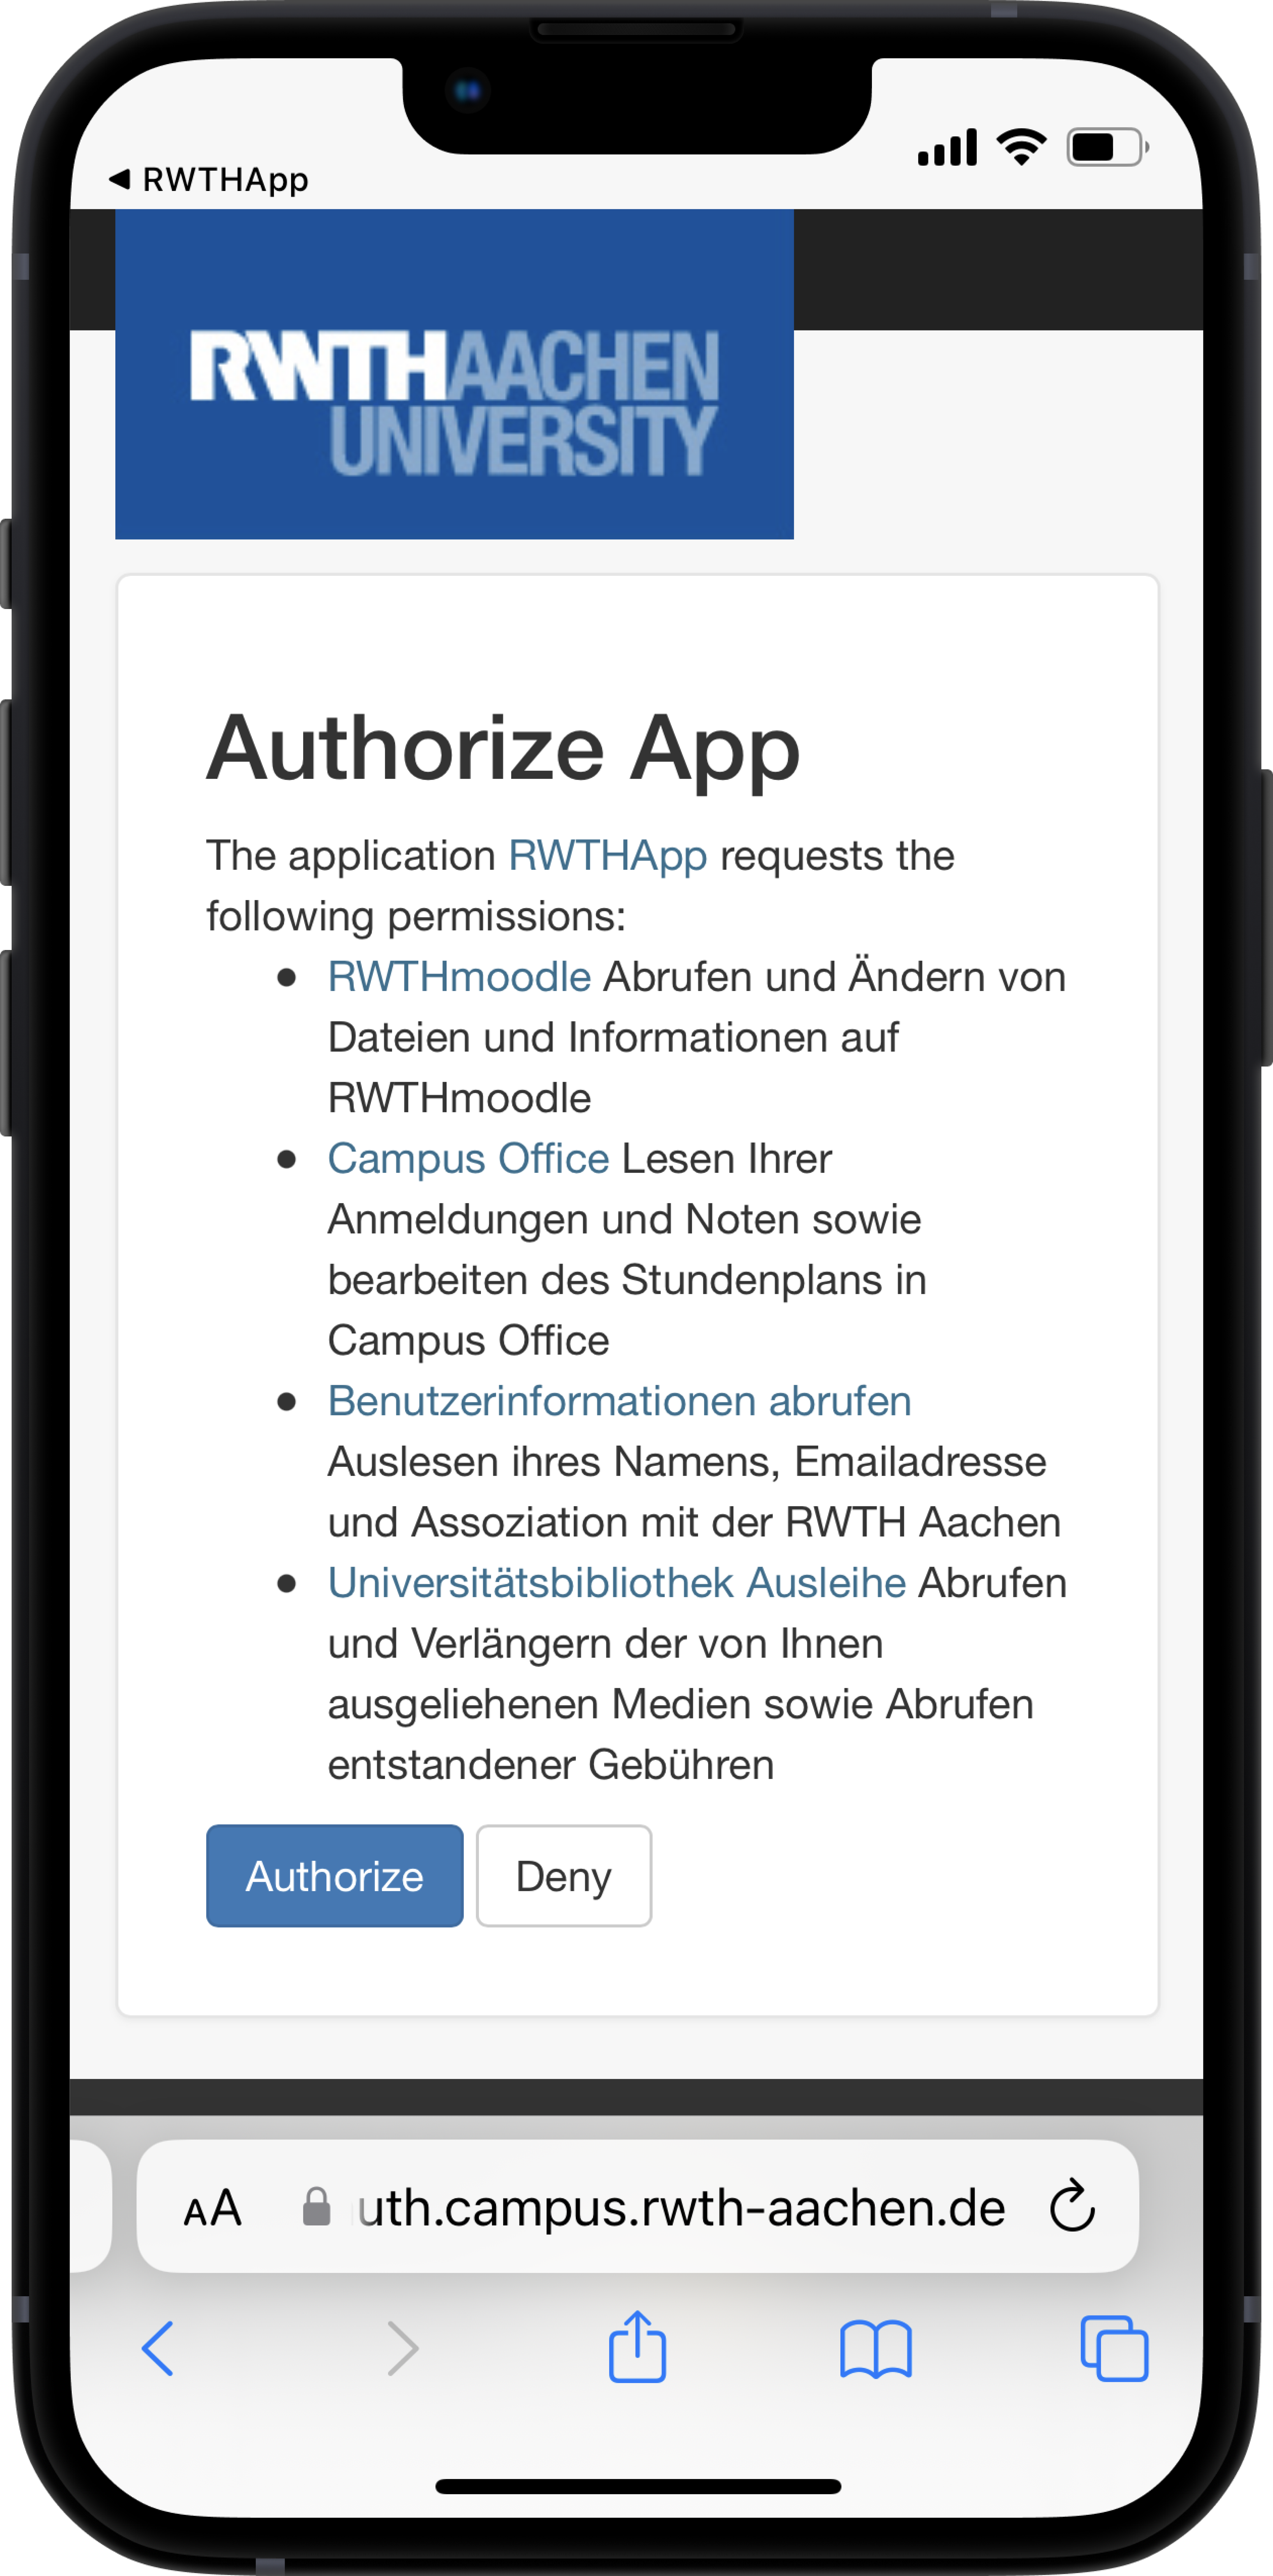 Authorizing the RWTH-App